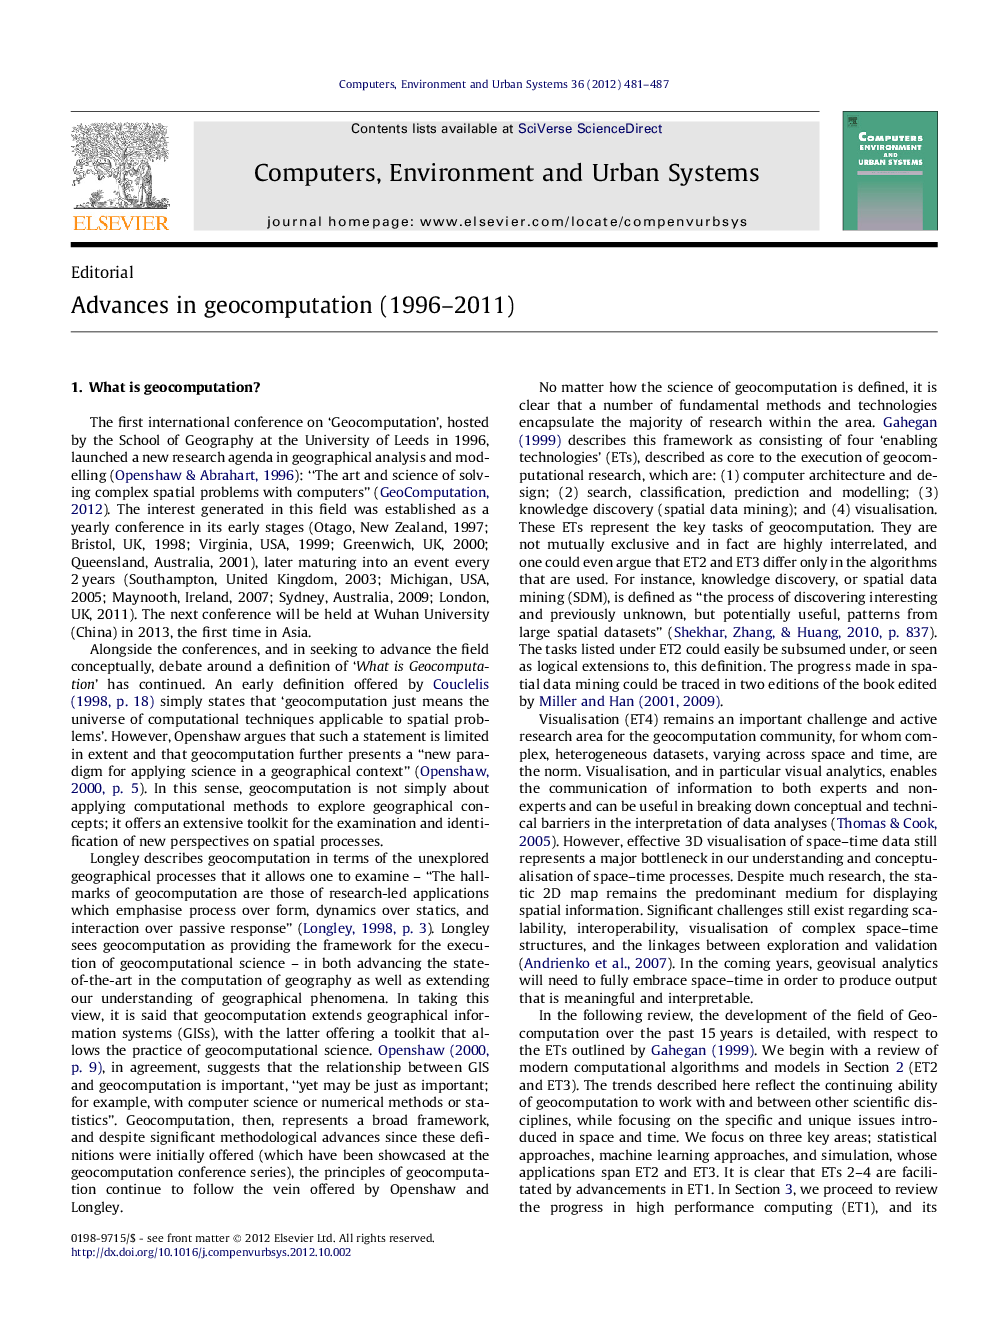 Advances in geocomputation (1996-2011)